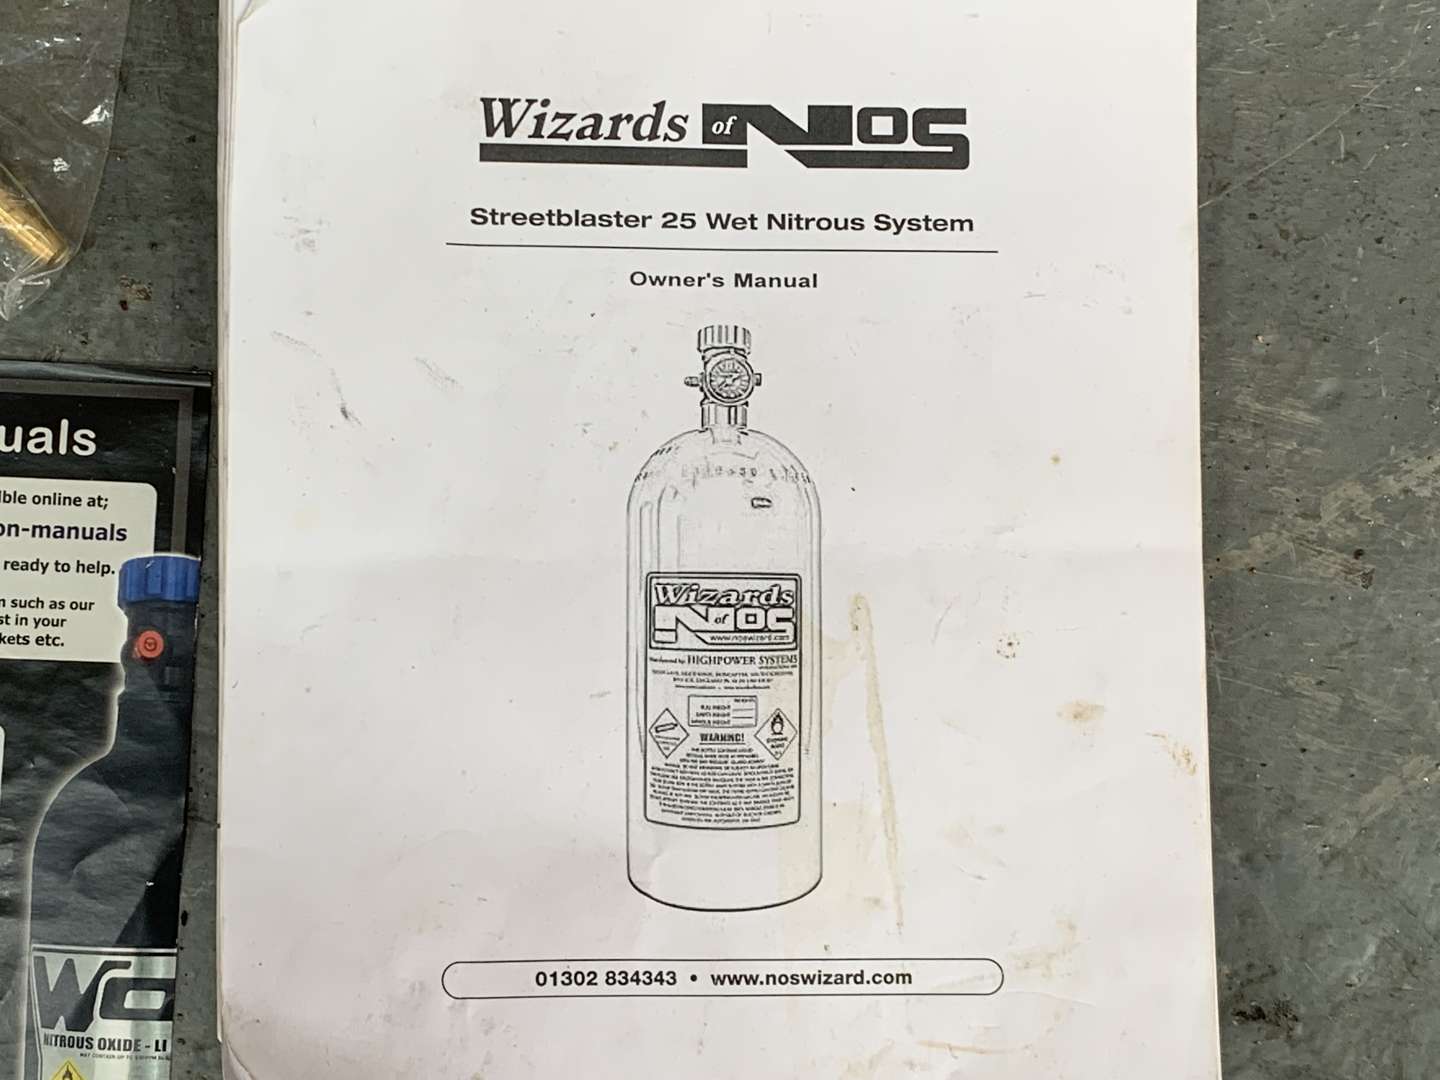 <p>Wizards of NOS Street Blaster 25 Wet Nitrous System</p>